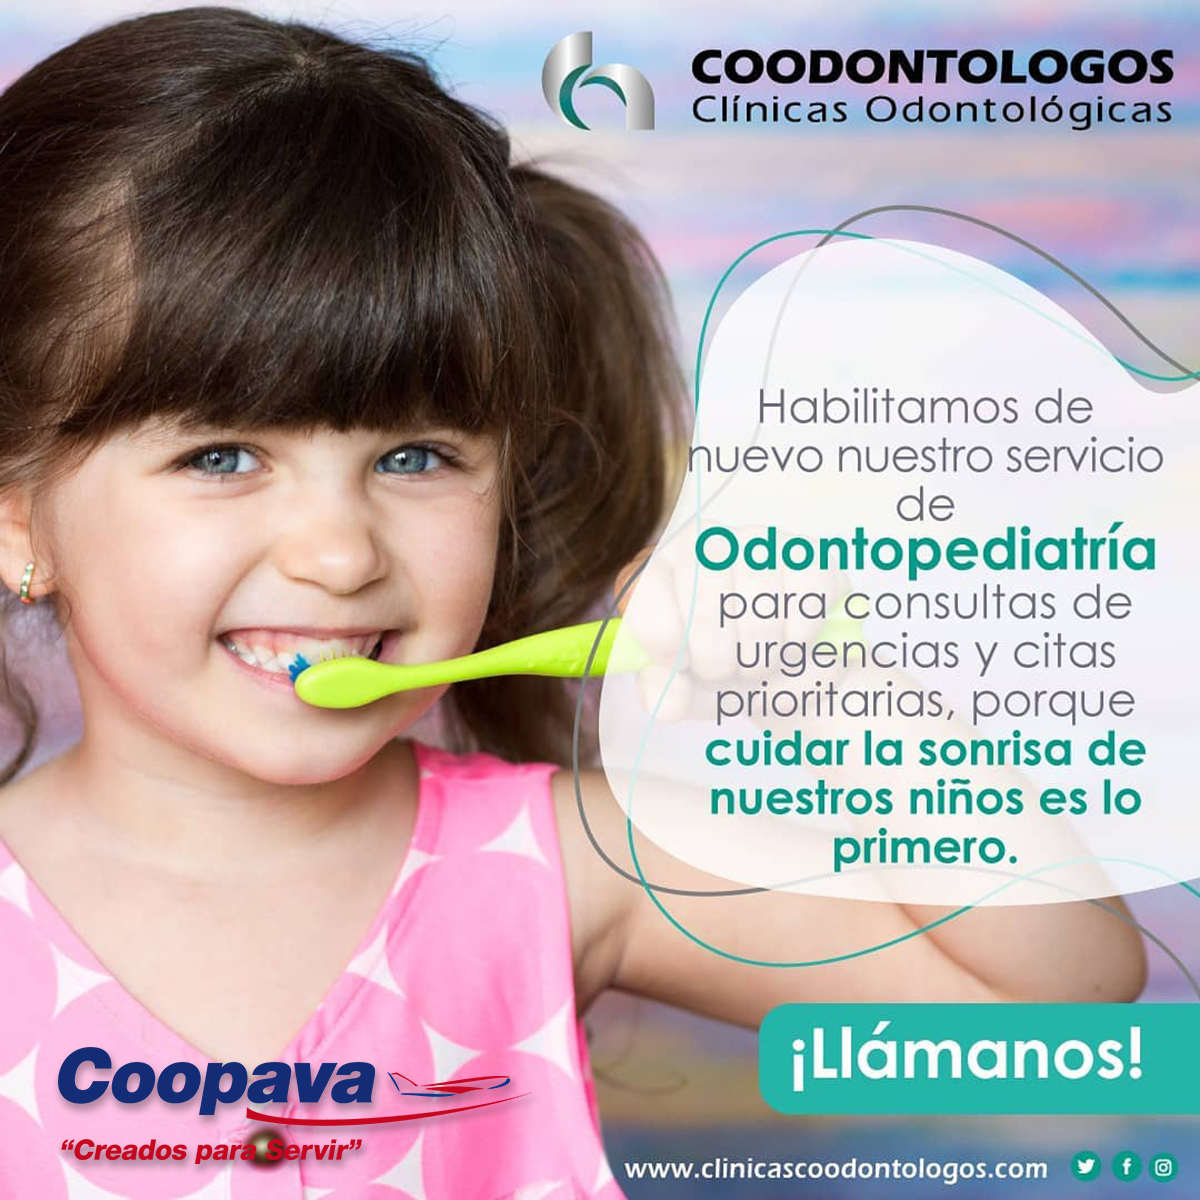 Coodontologos Odontopediatria.jpg (773 KB)